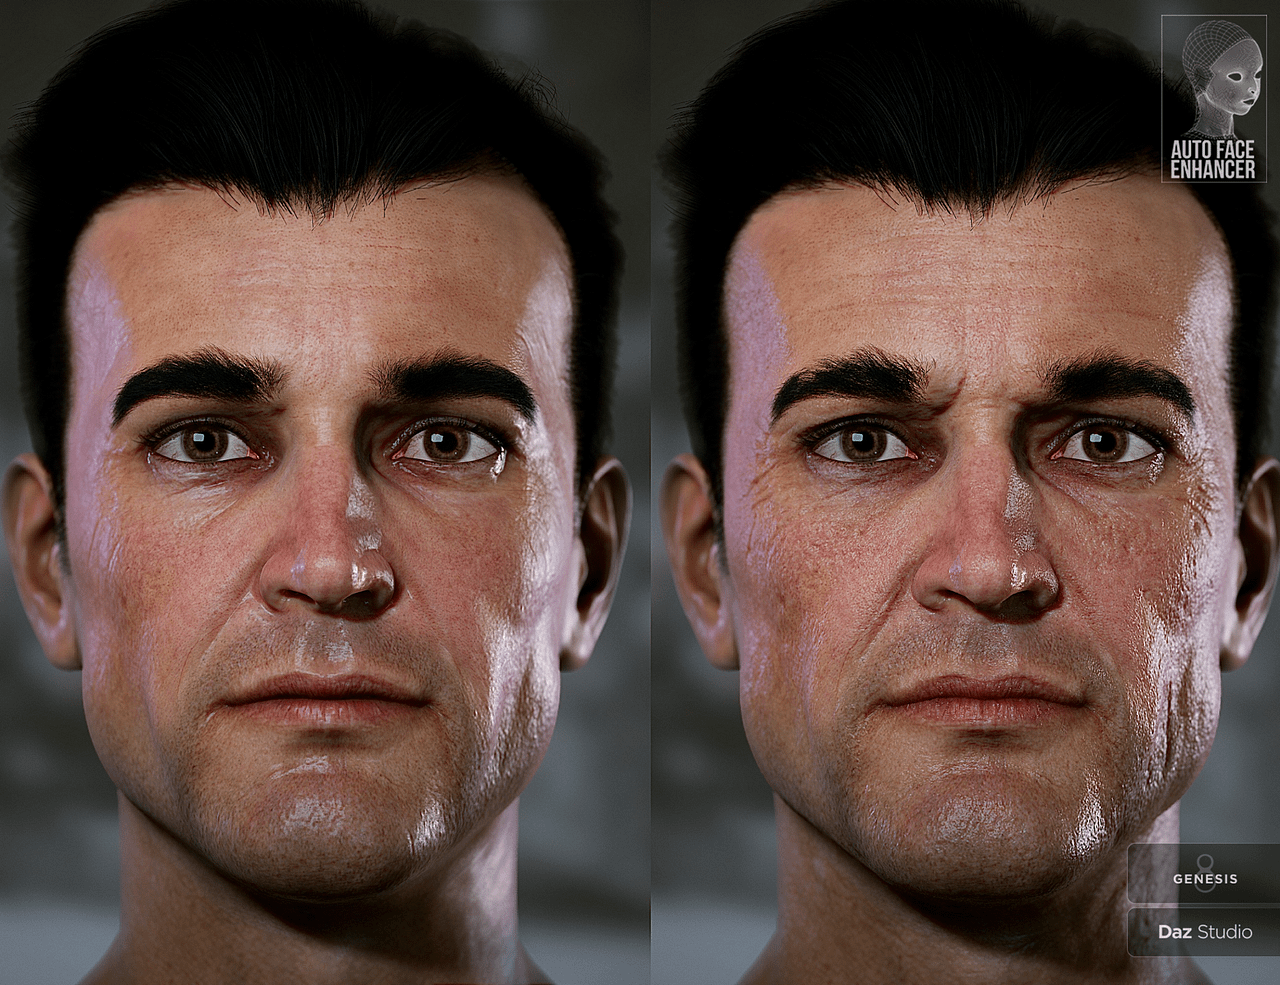 Additional face details by Face Enhancer for daz